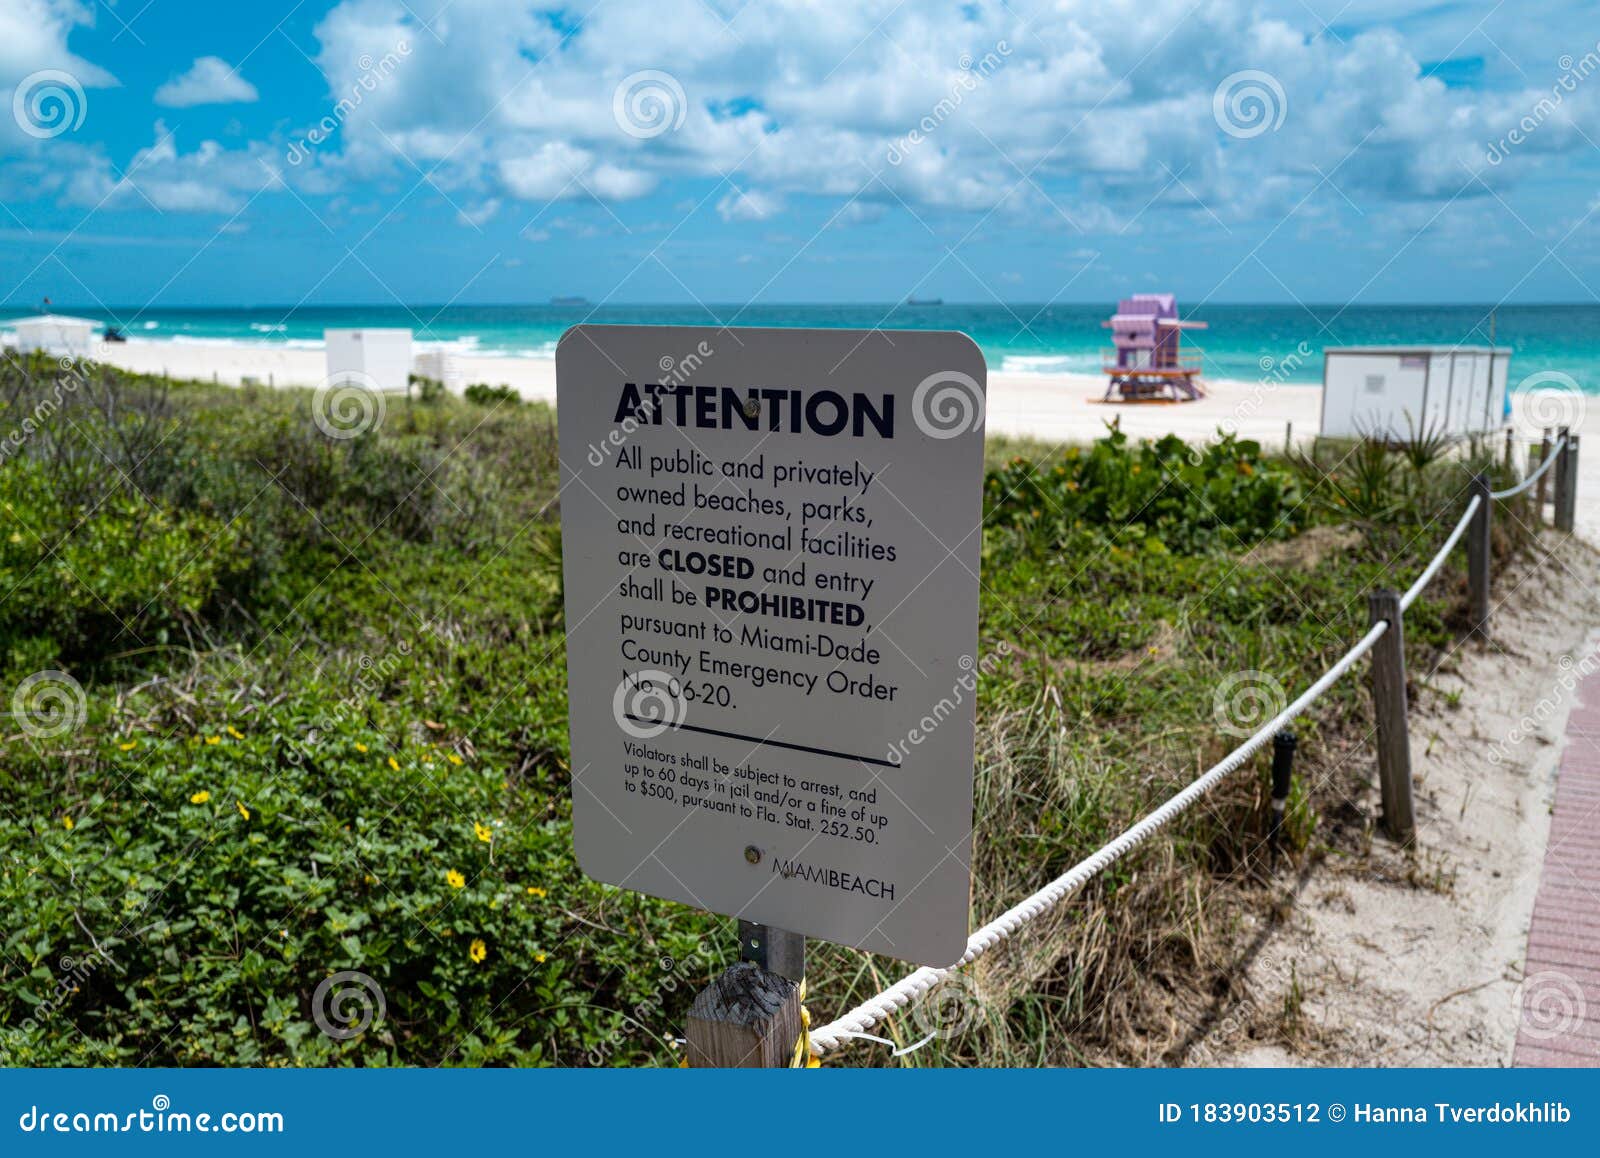 emergency orders miami-dade county. coronavirus, covid-19. miami beach closing sign. beaches closed.